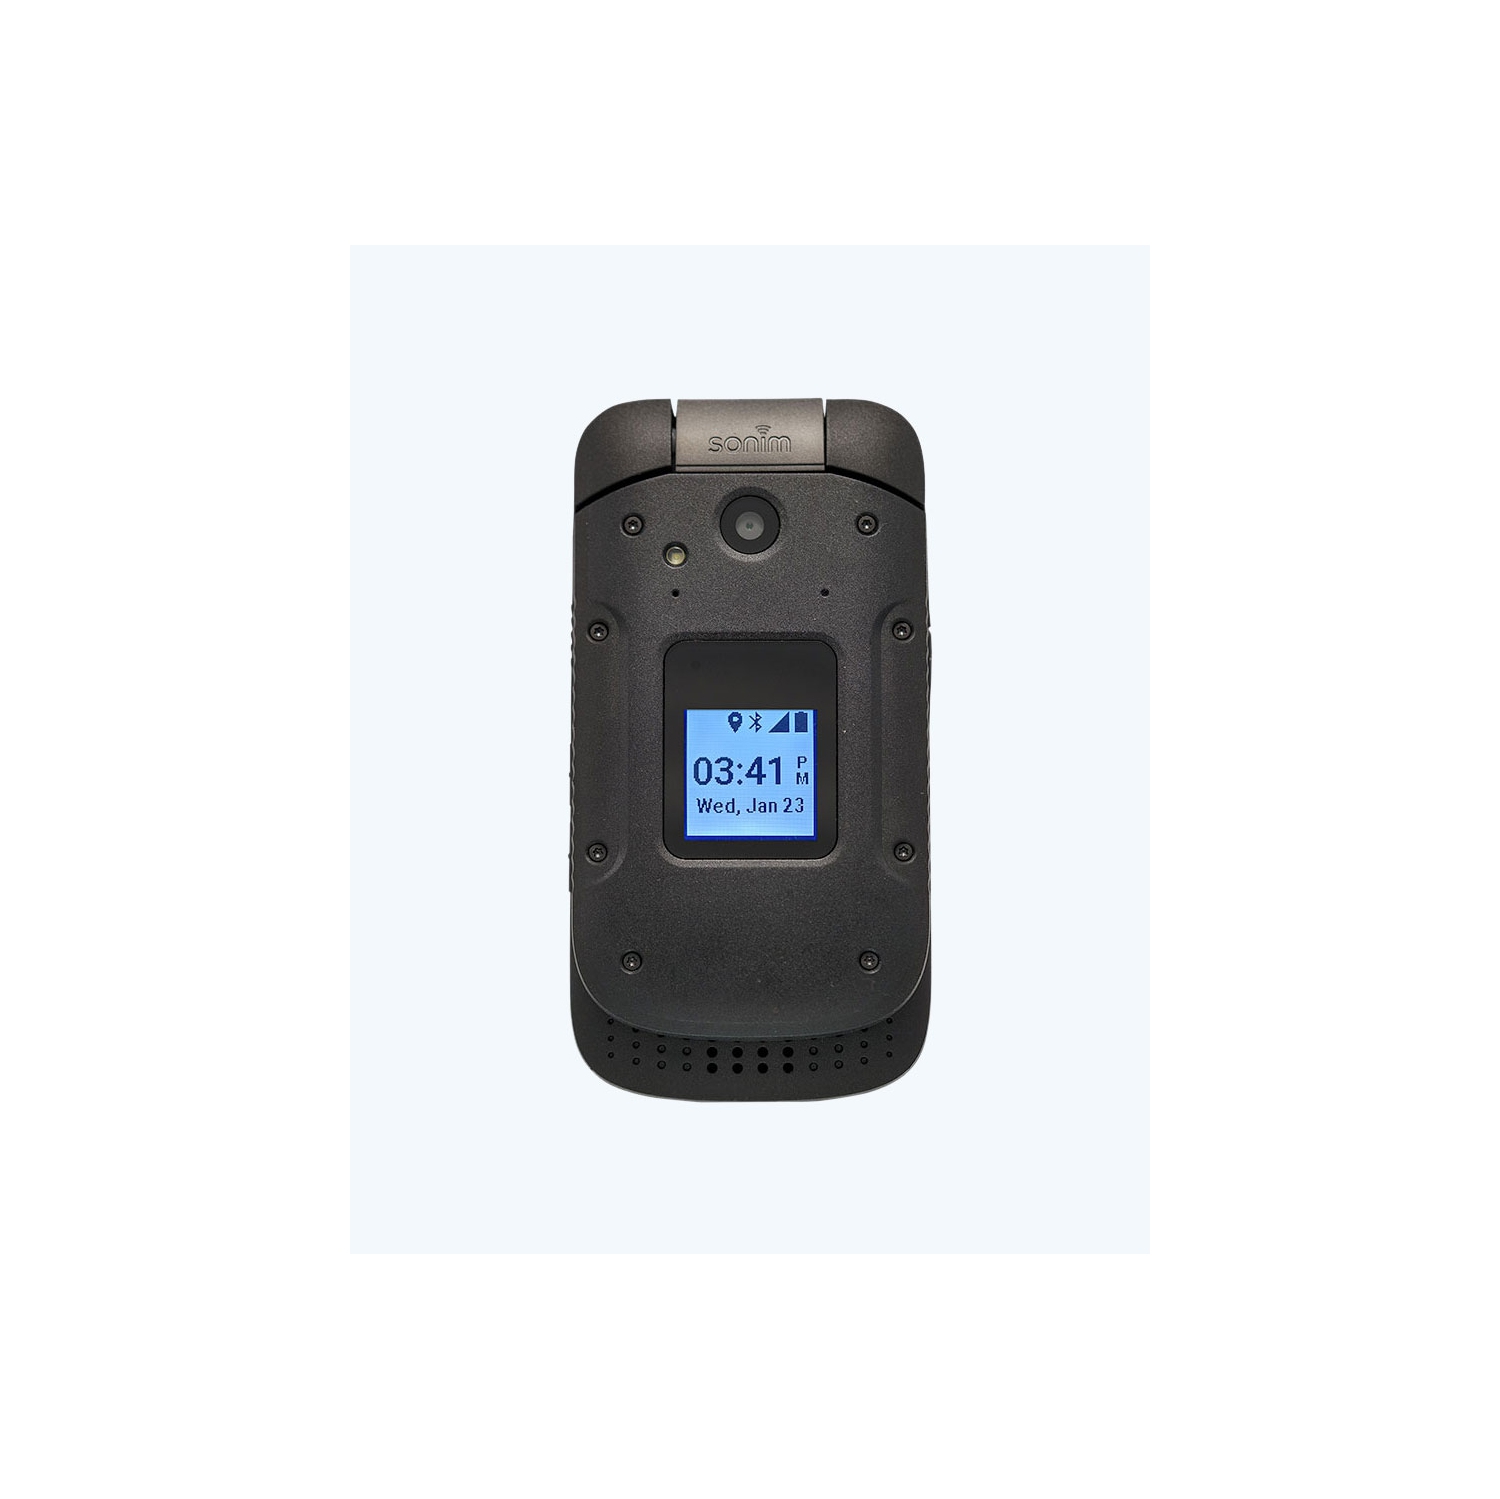 Refurbished (Excellent) - Sonim XP3 Flip phone - Unlocked